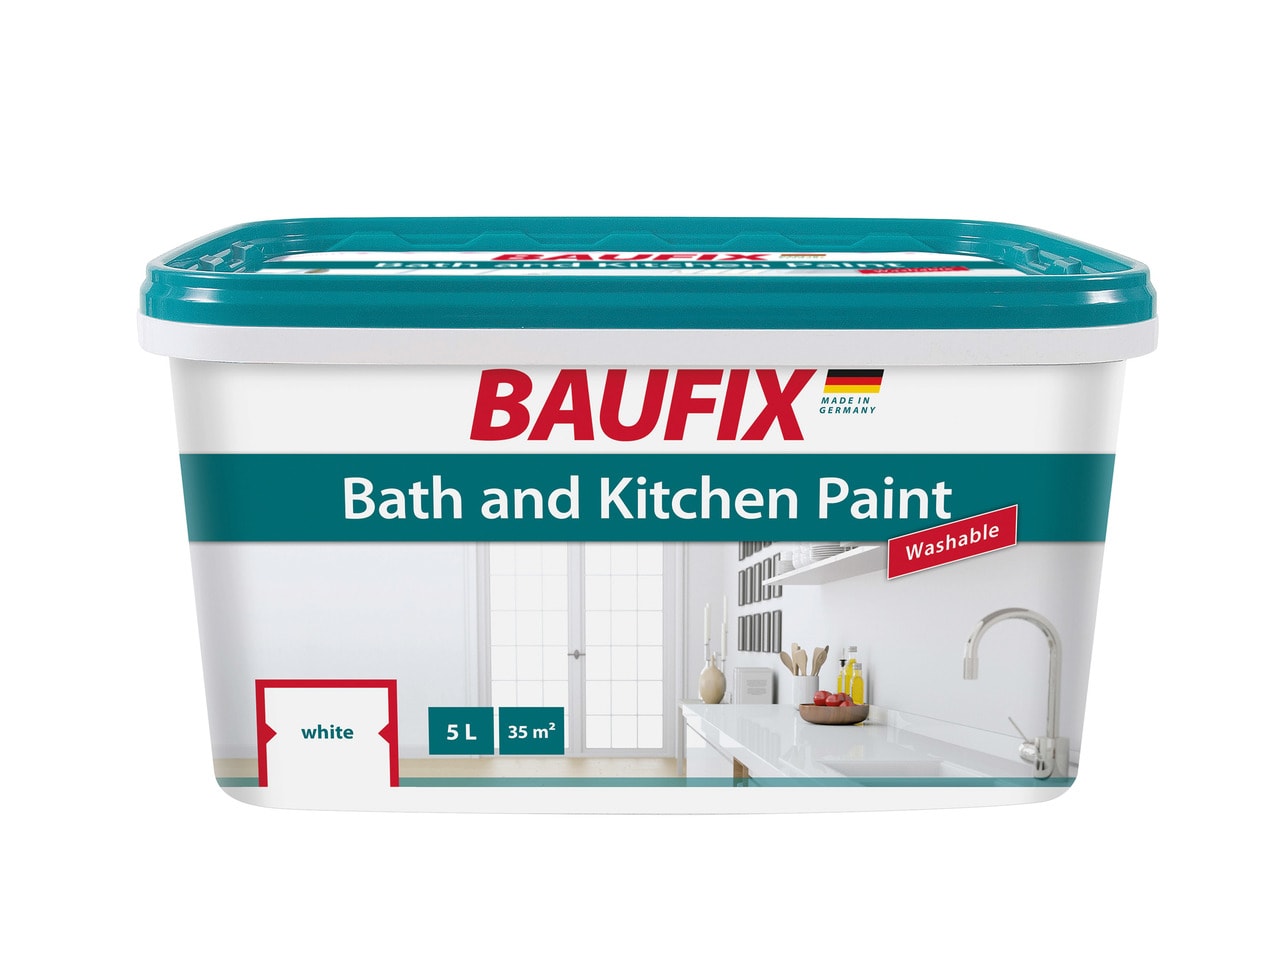 Baufix Bathroom and Kitchen Paint1